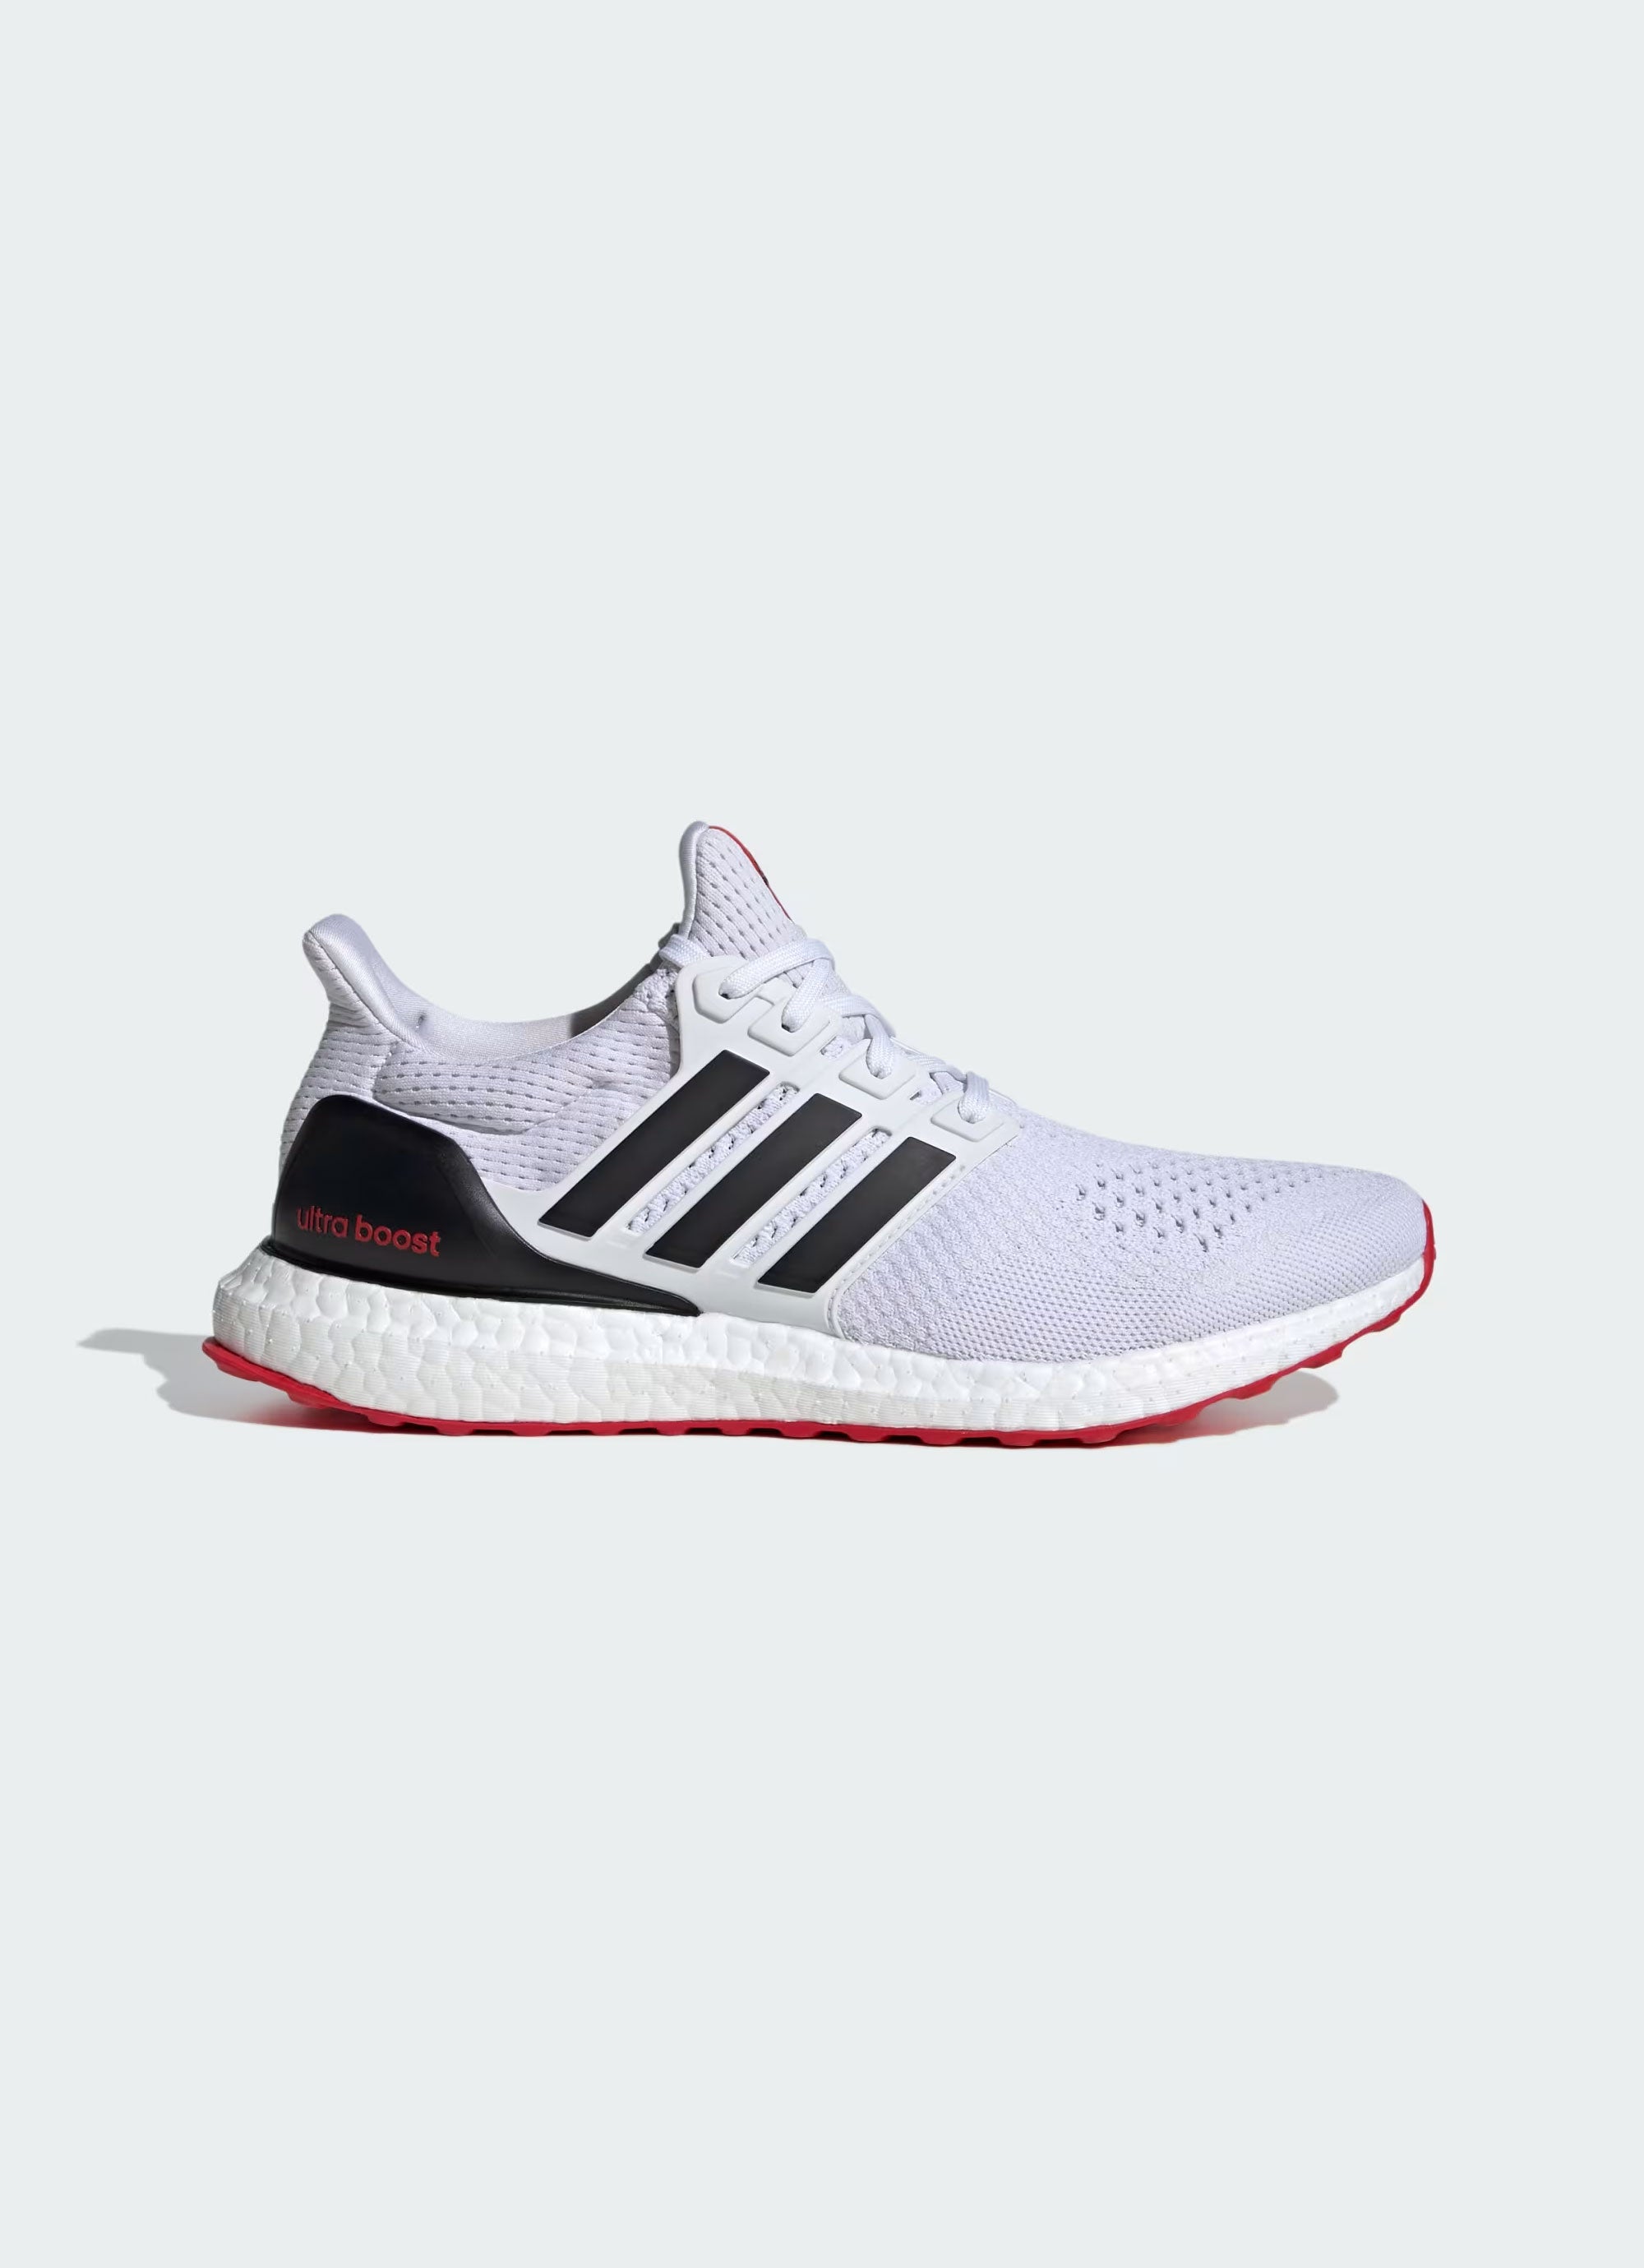 Adidas Sportswear Ultraboost 1.0 Shoes in White | Red Rat